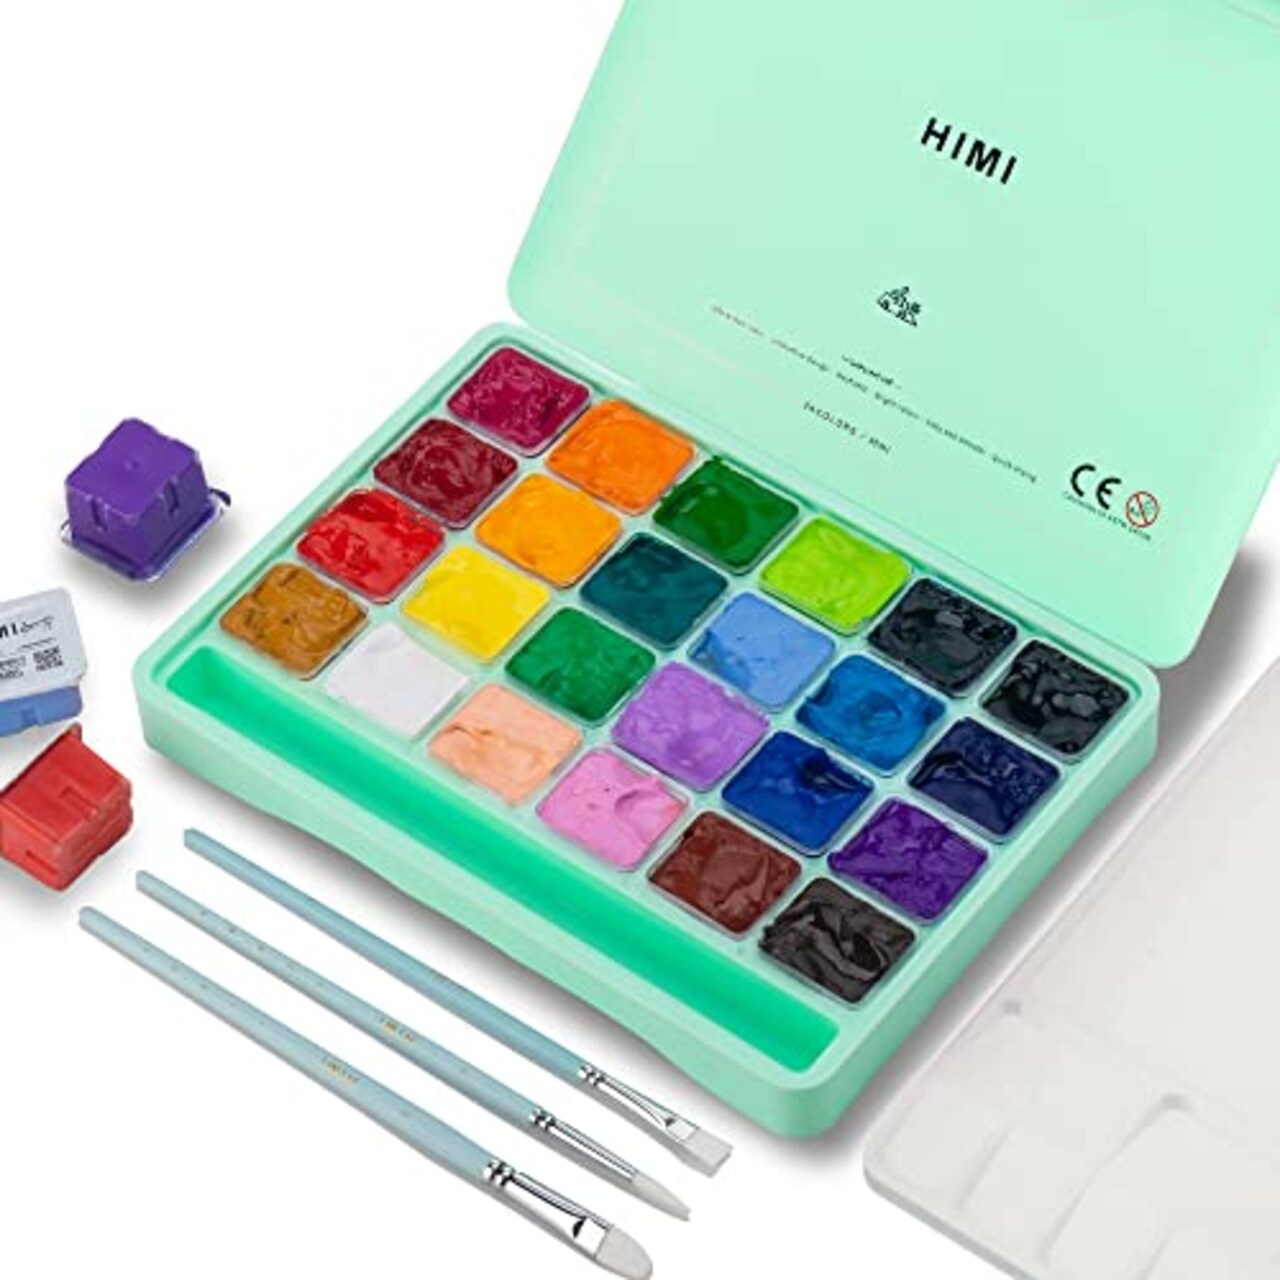 HIMI Gouache Paint Set, 24 Colors x 30ml/1oz with 3 Brushes & a